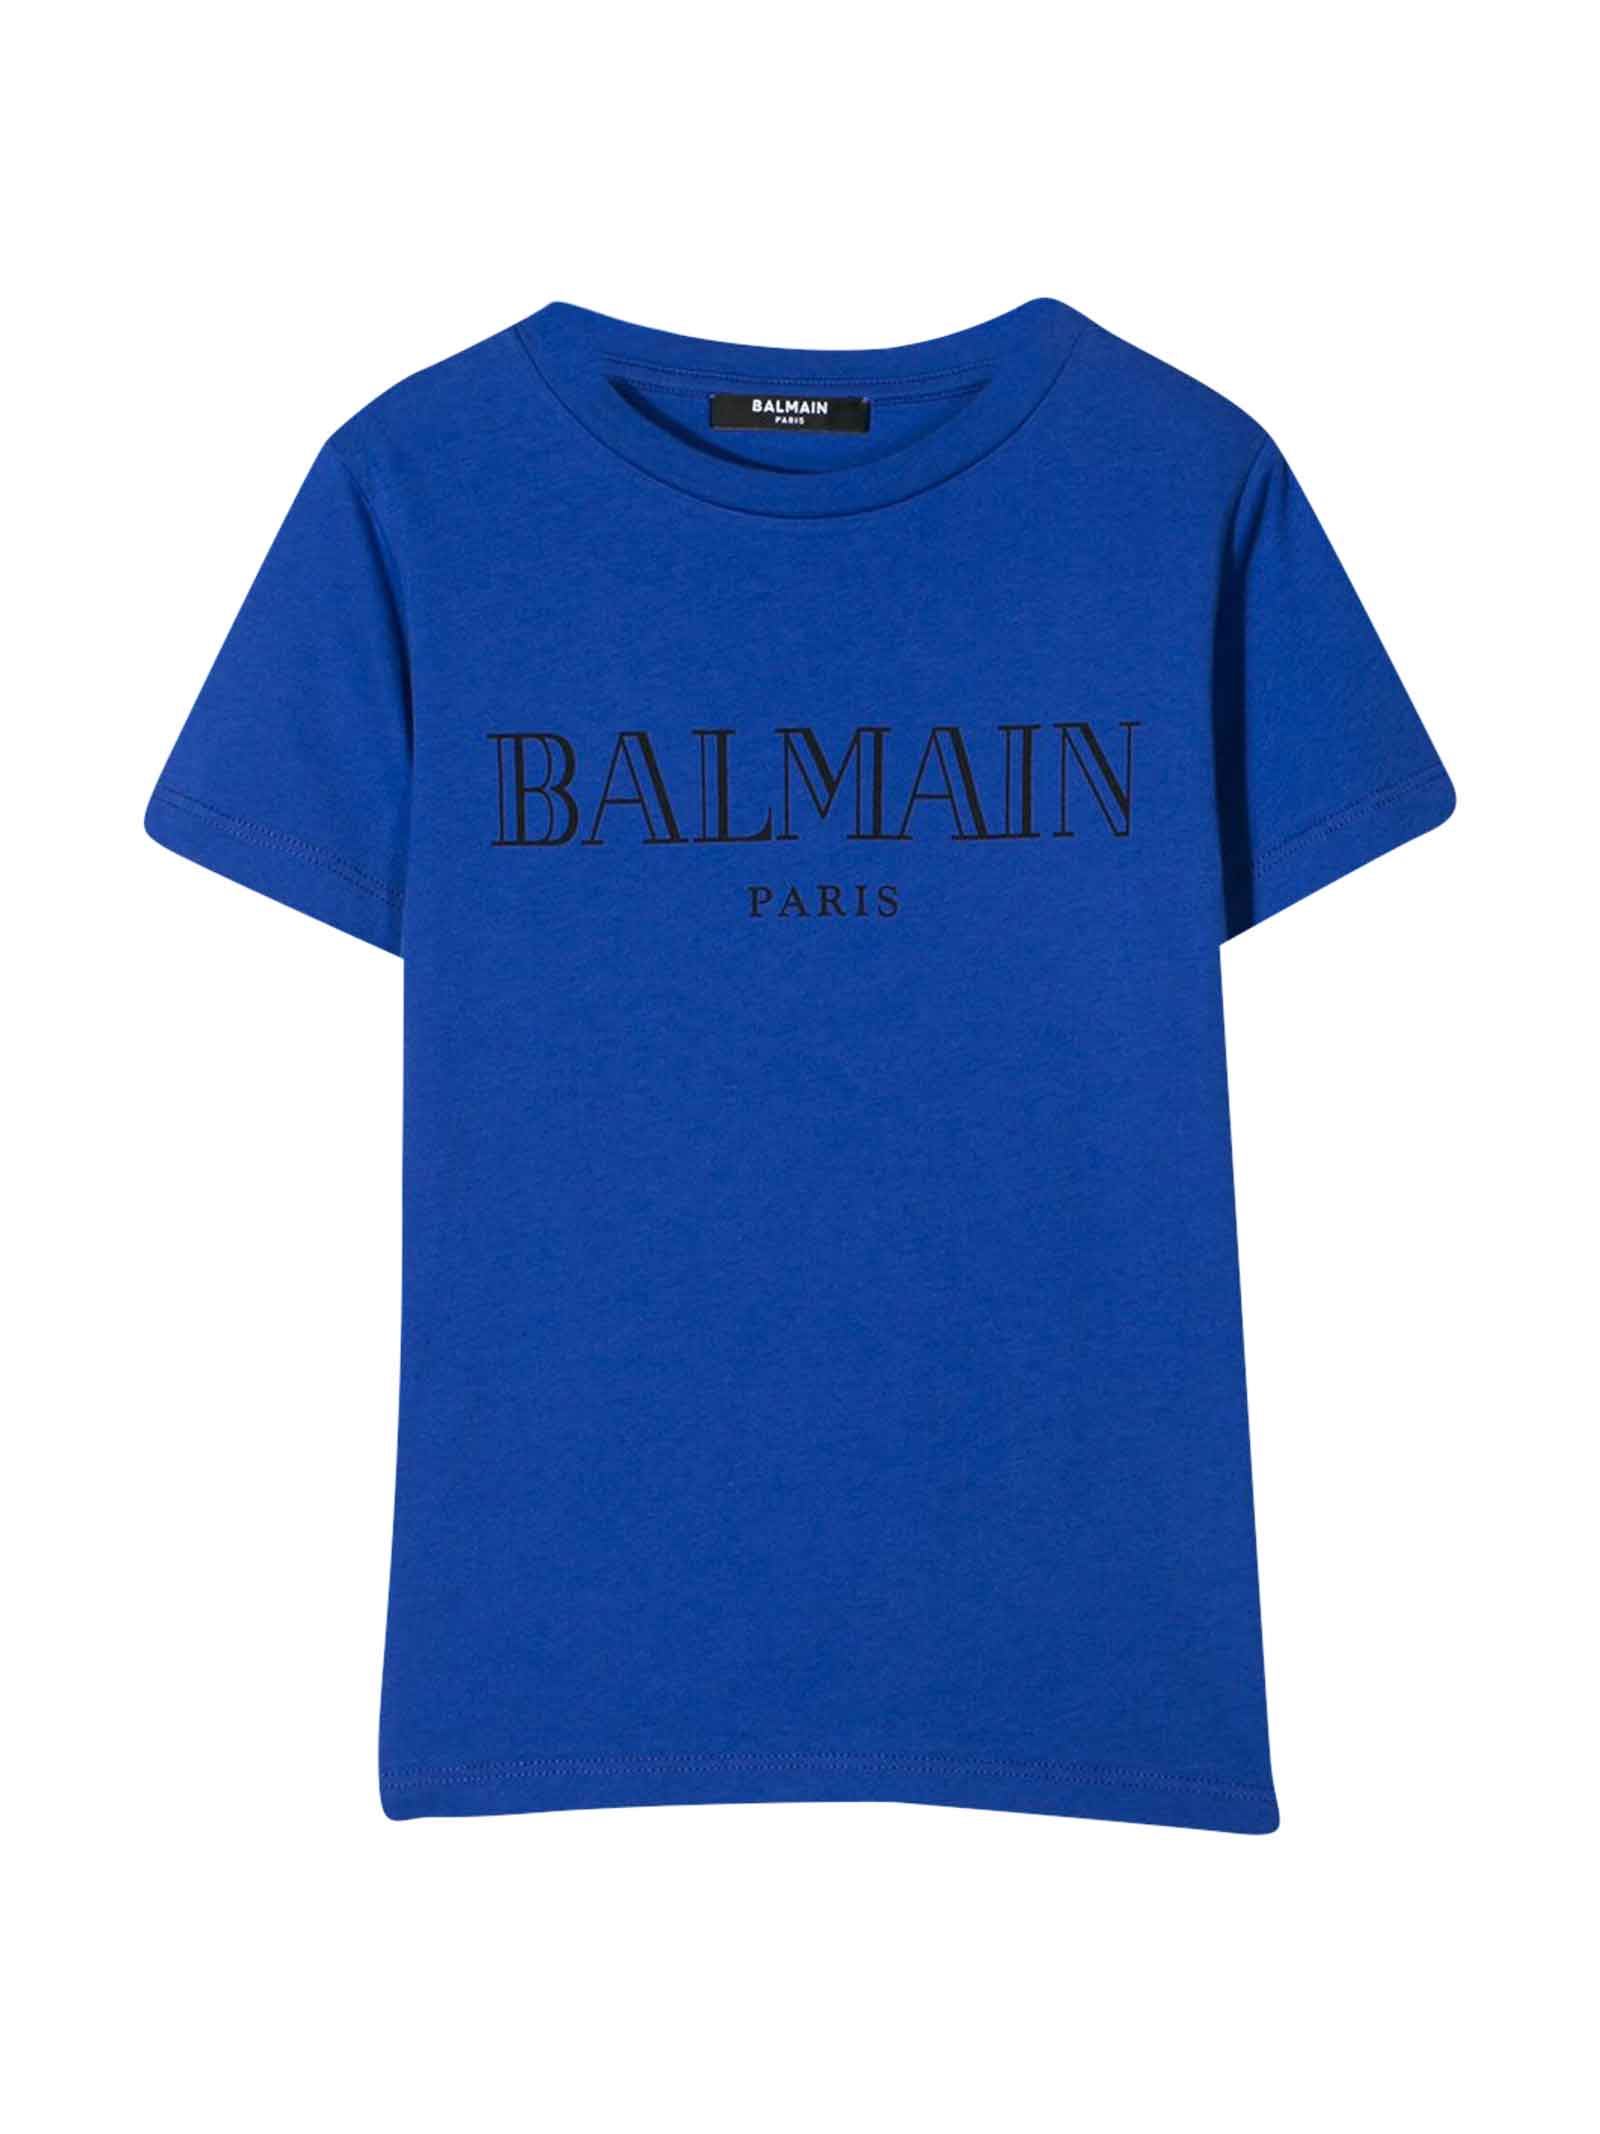 BALMAIN BLUE T-SHIRT WITH FRONTAL LOGO,11305323